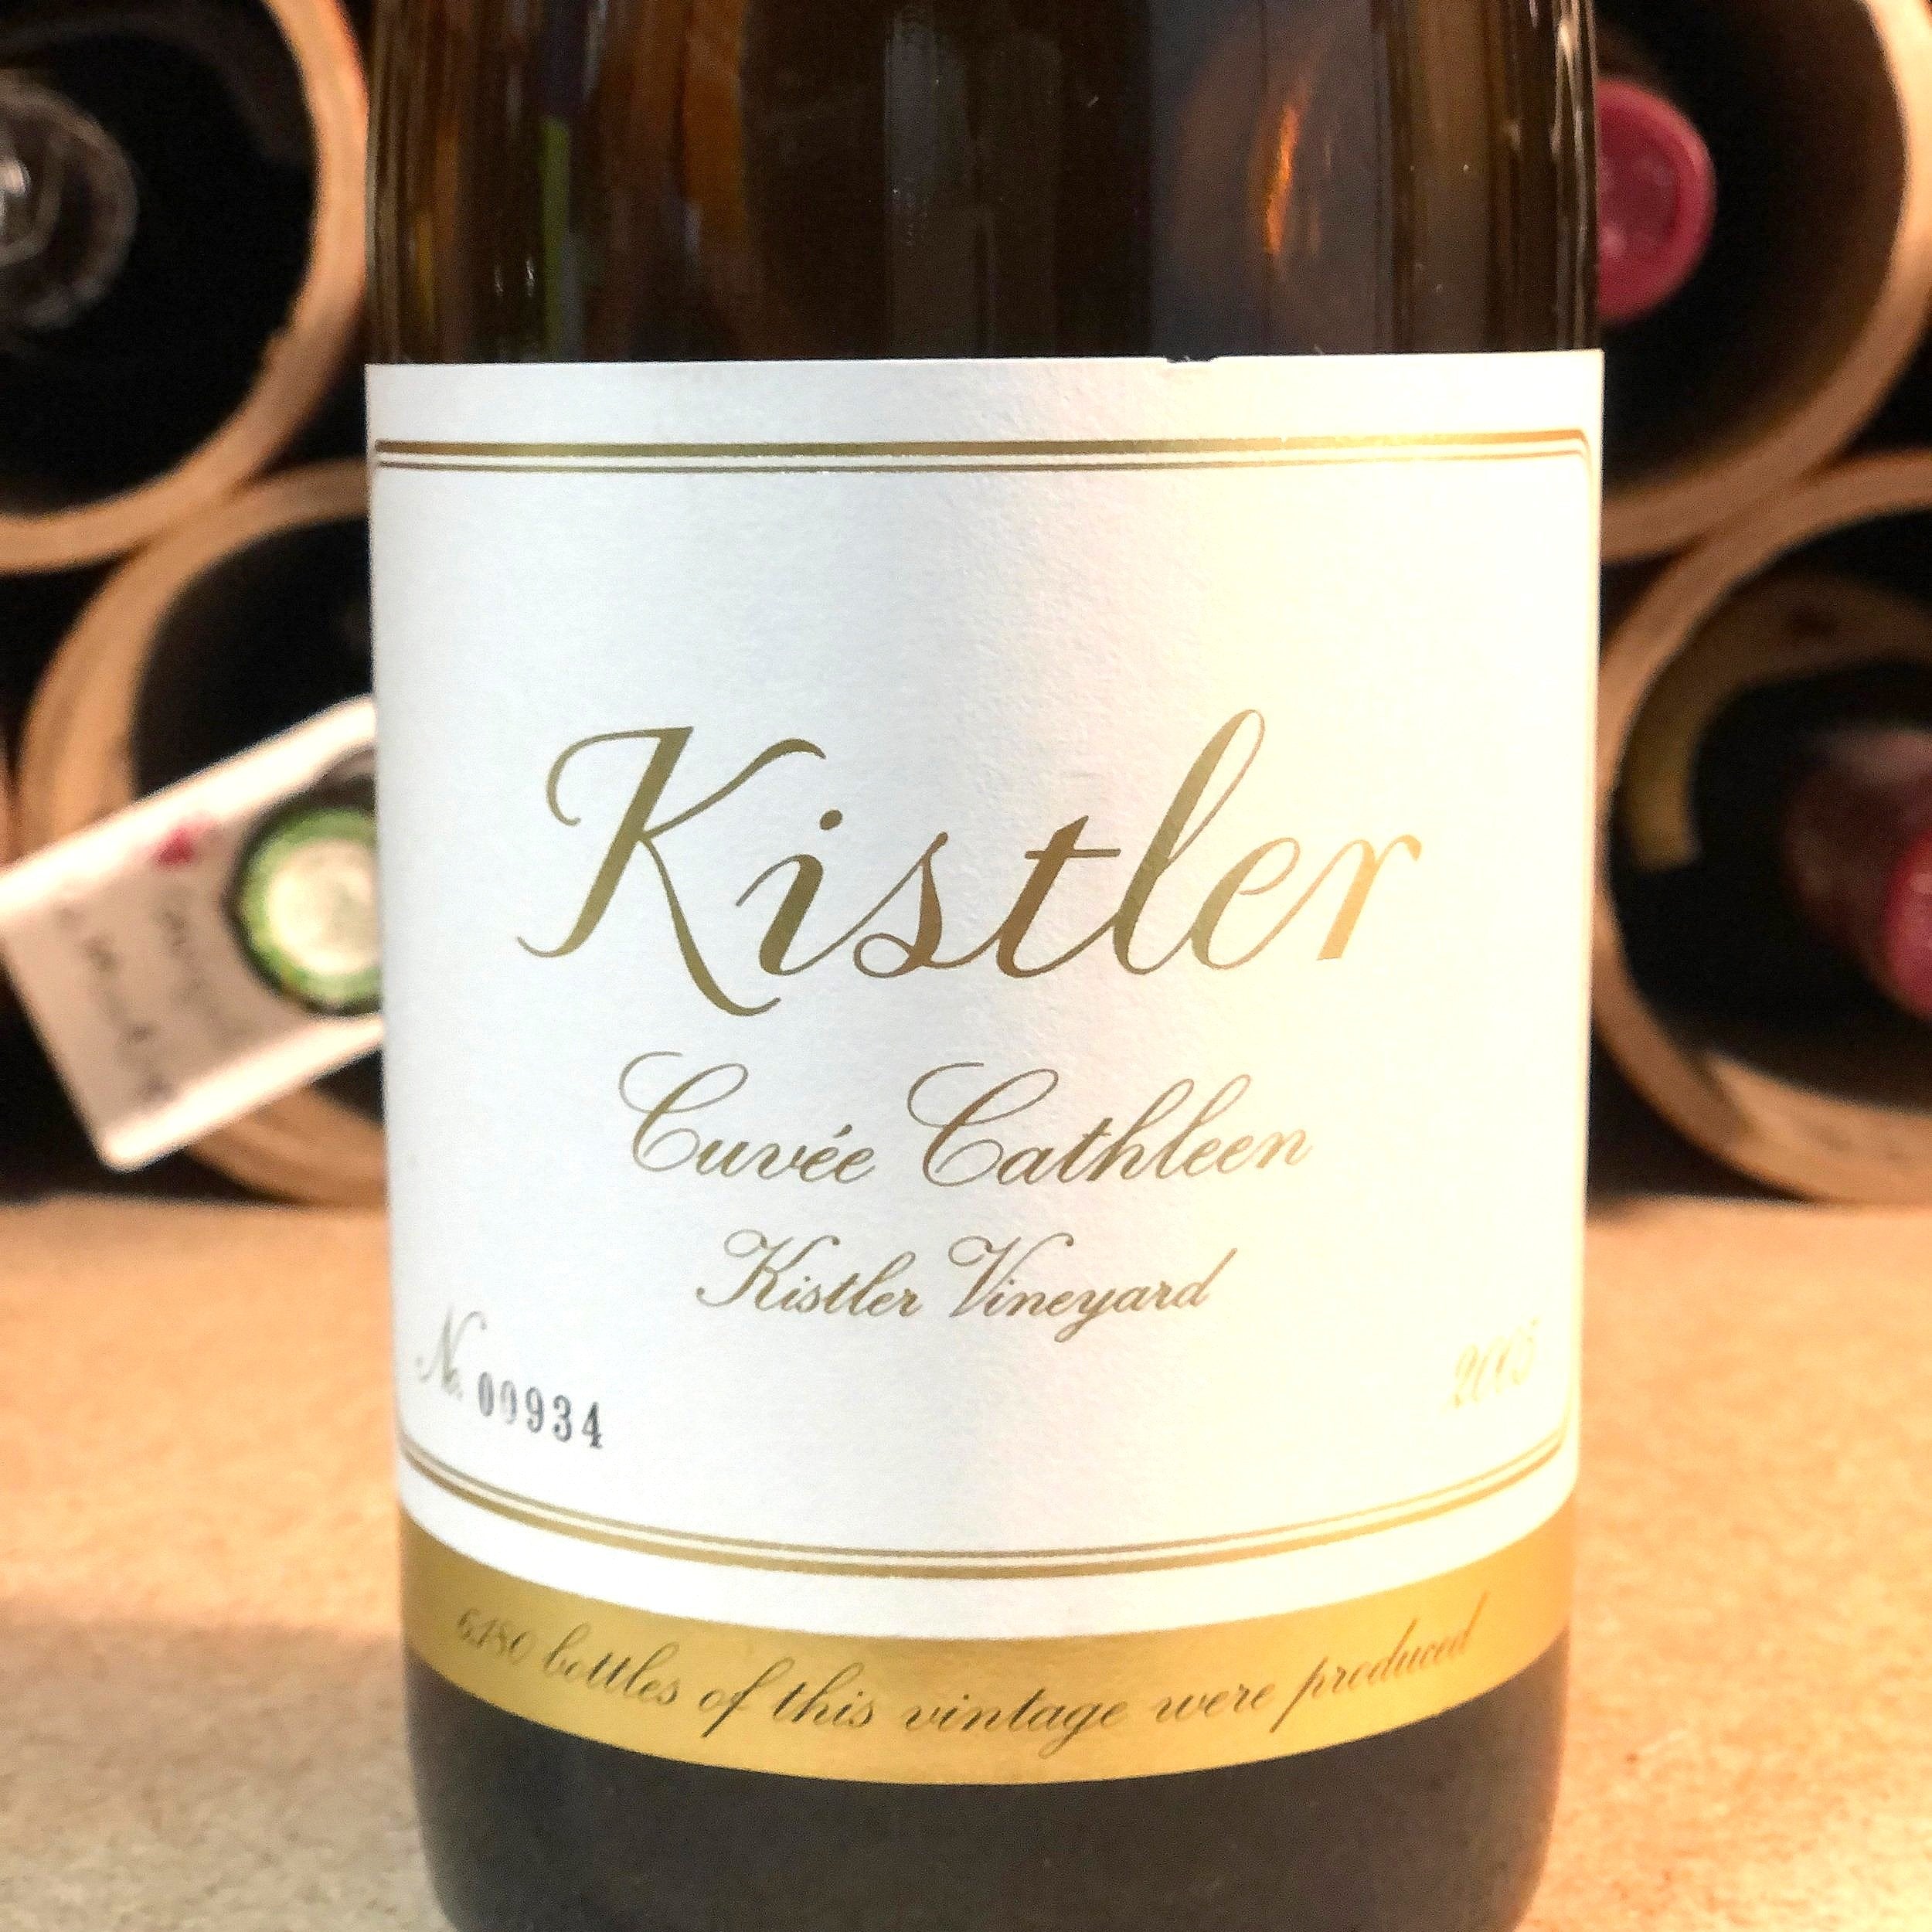 Kistler, Sonoma Valley, Kistler Vineyard, Cuvee Cathleen, Chardonnay 2005